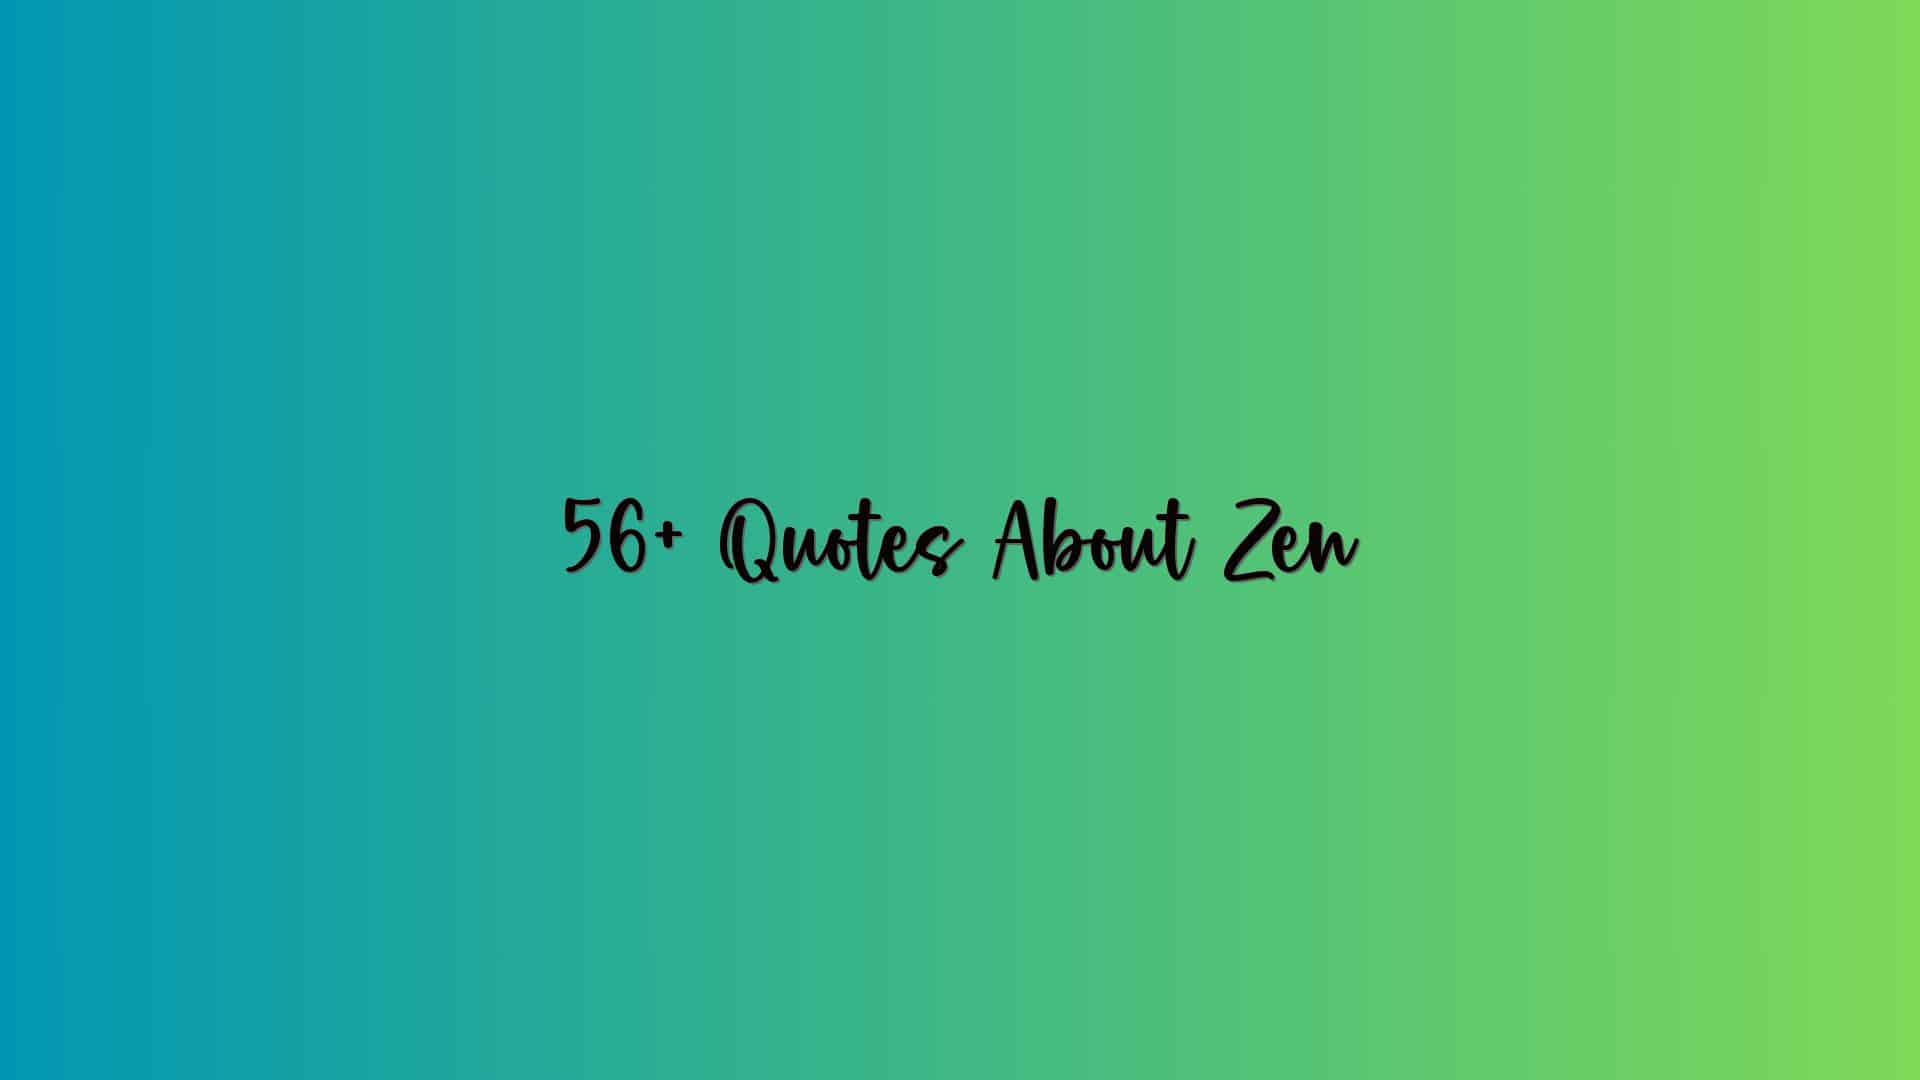 56+ Quotes About Zen